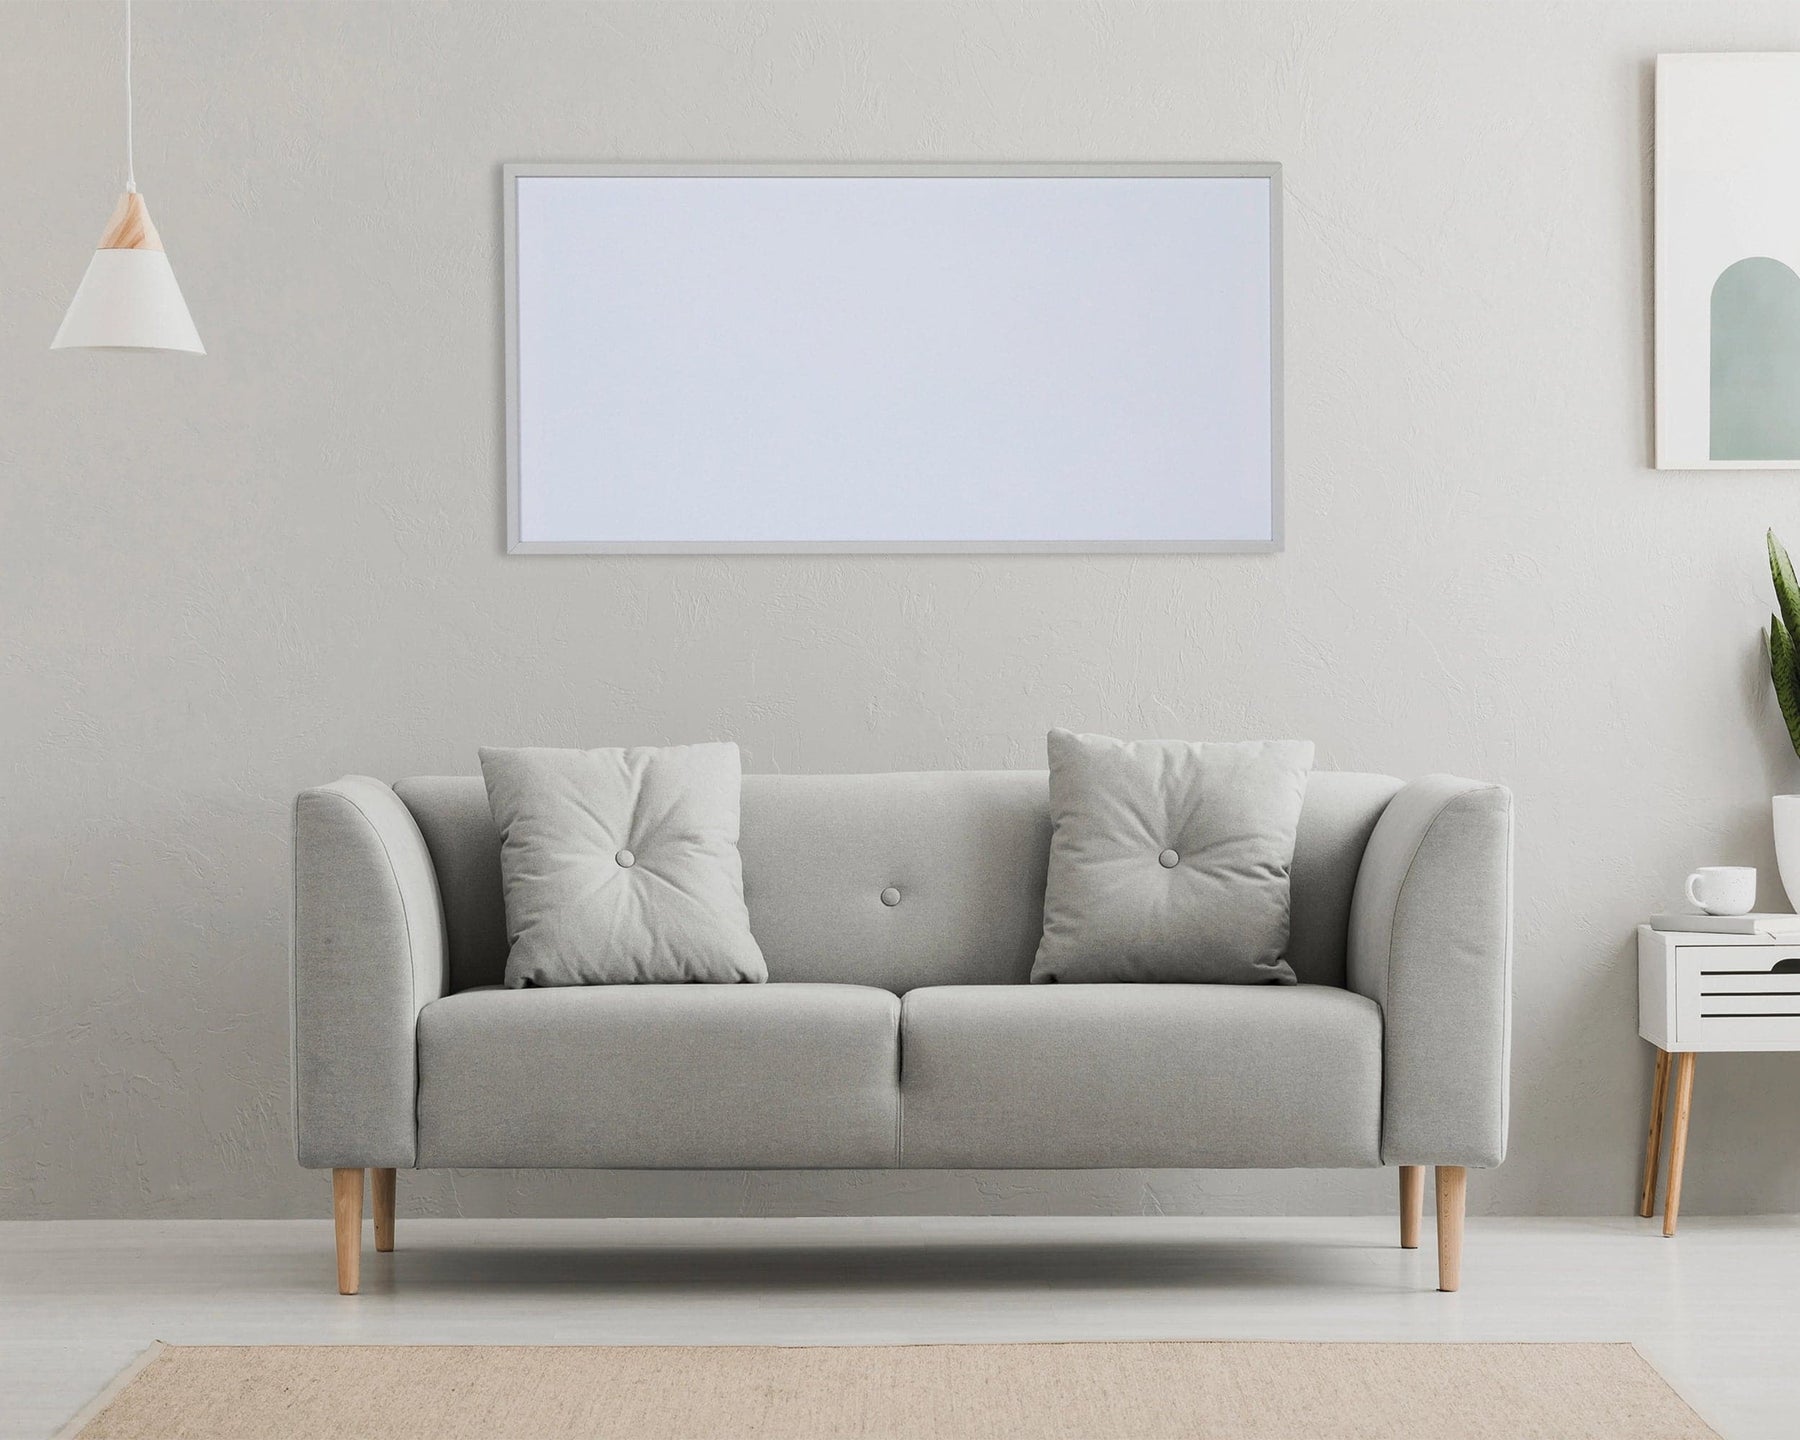 600W Smart Wi-Fi Infrared Heating Panel - Grade A - 100cm x 60cm